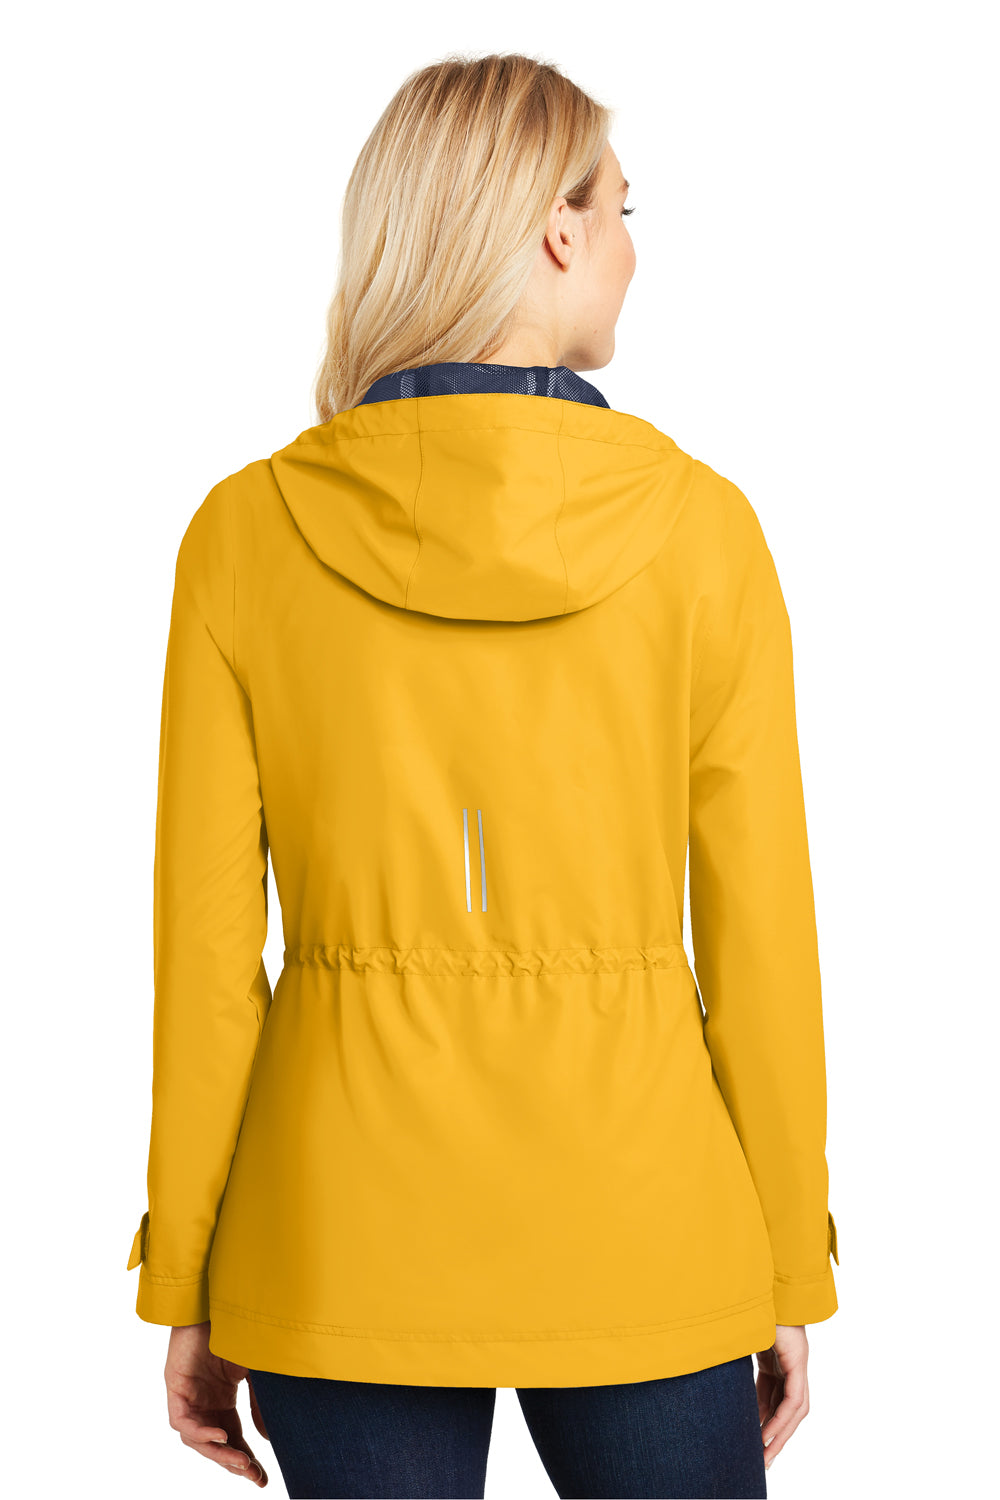 Port Authority L7710 Womens Northwest Slicker Waterproof Full Zip Hooded Jacket Yellow Back